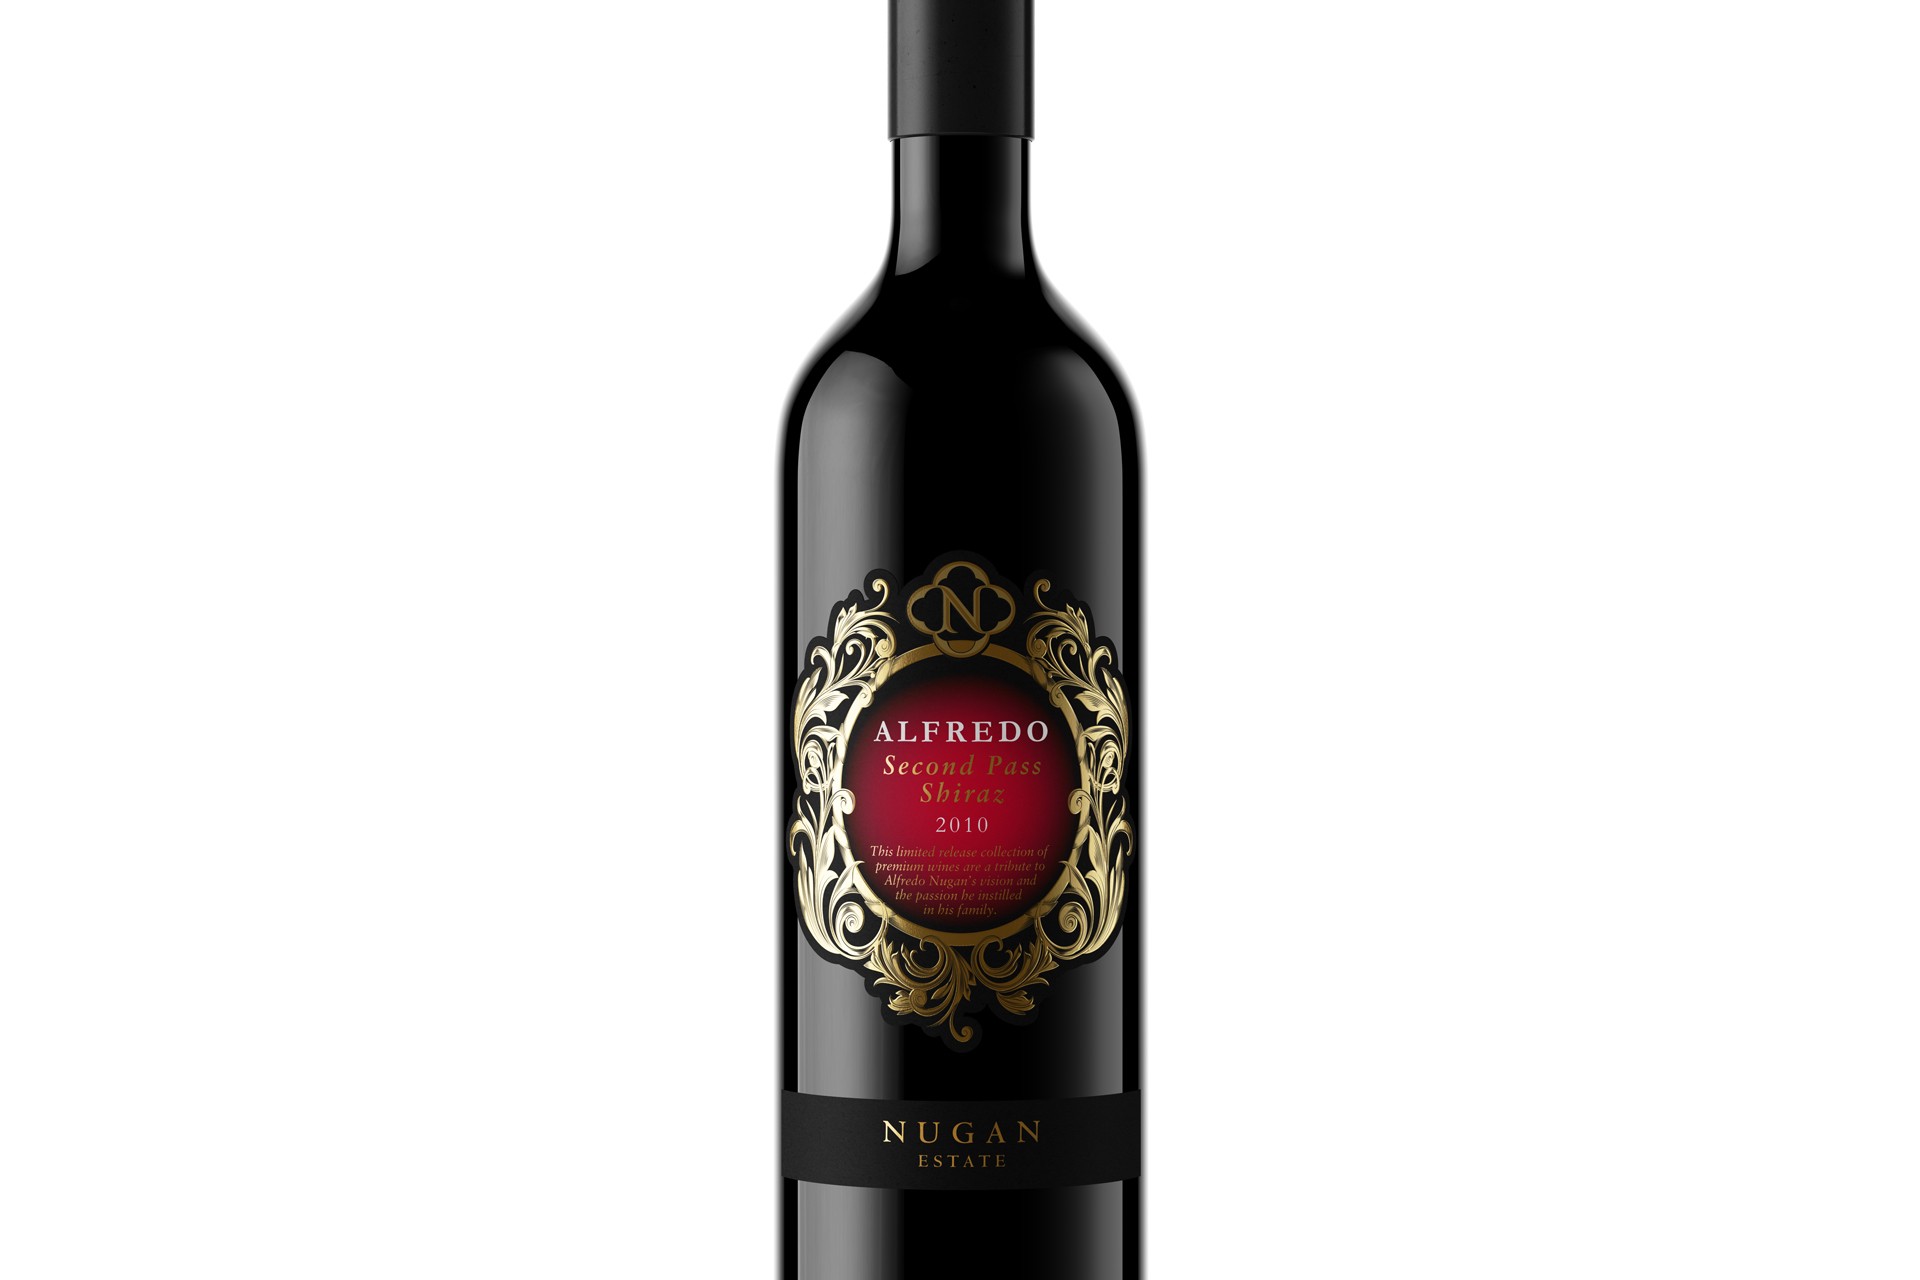 NuganEstateAlfredo wine packaging design shiraz